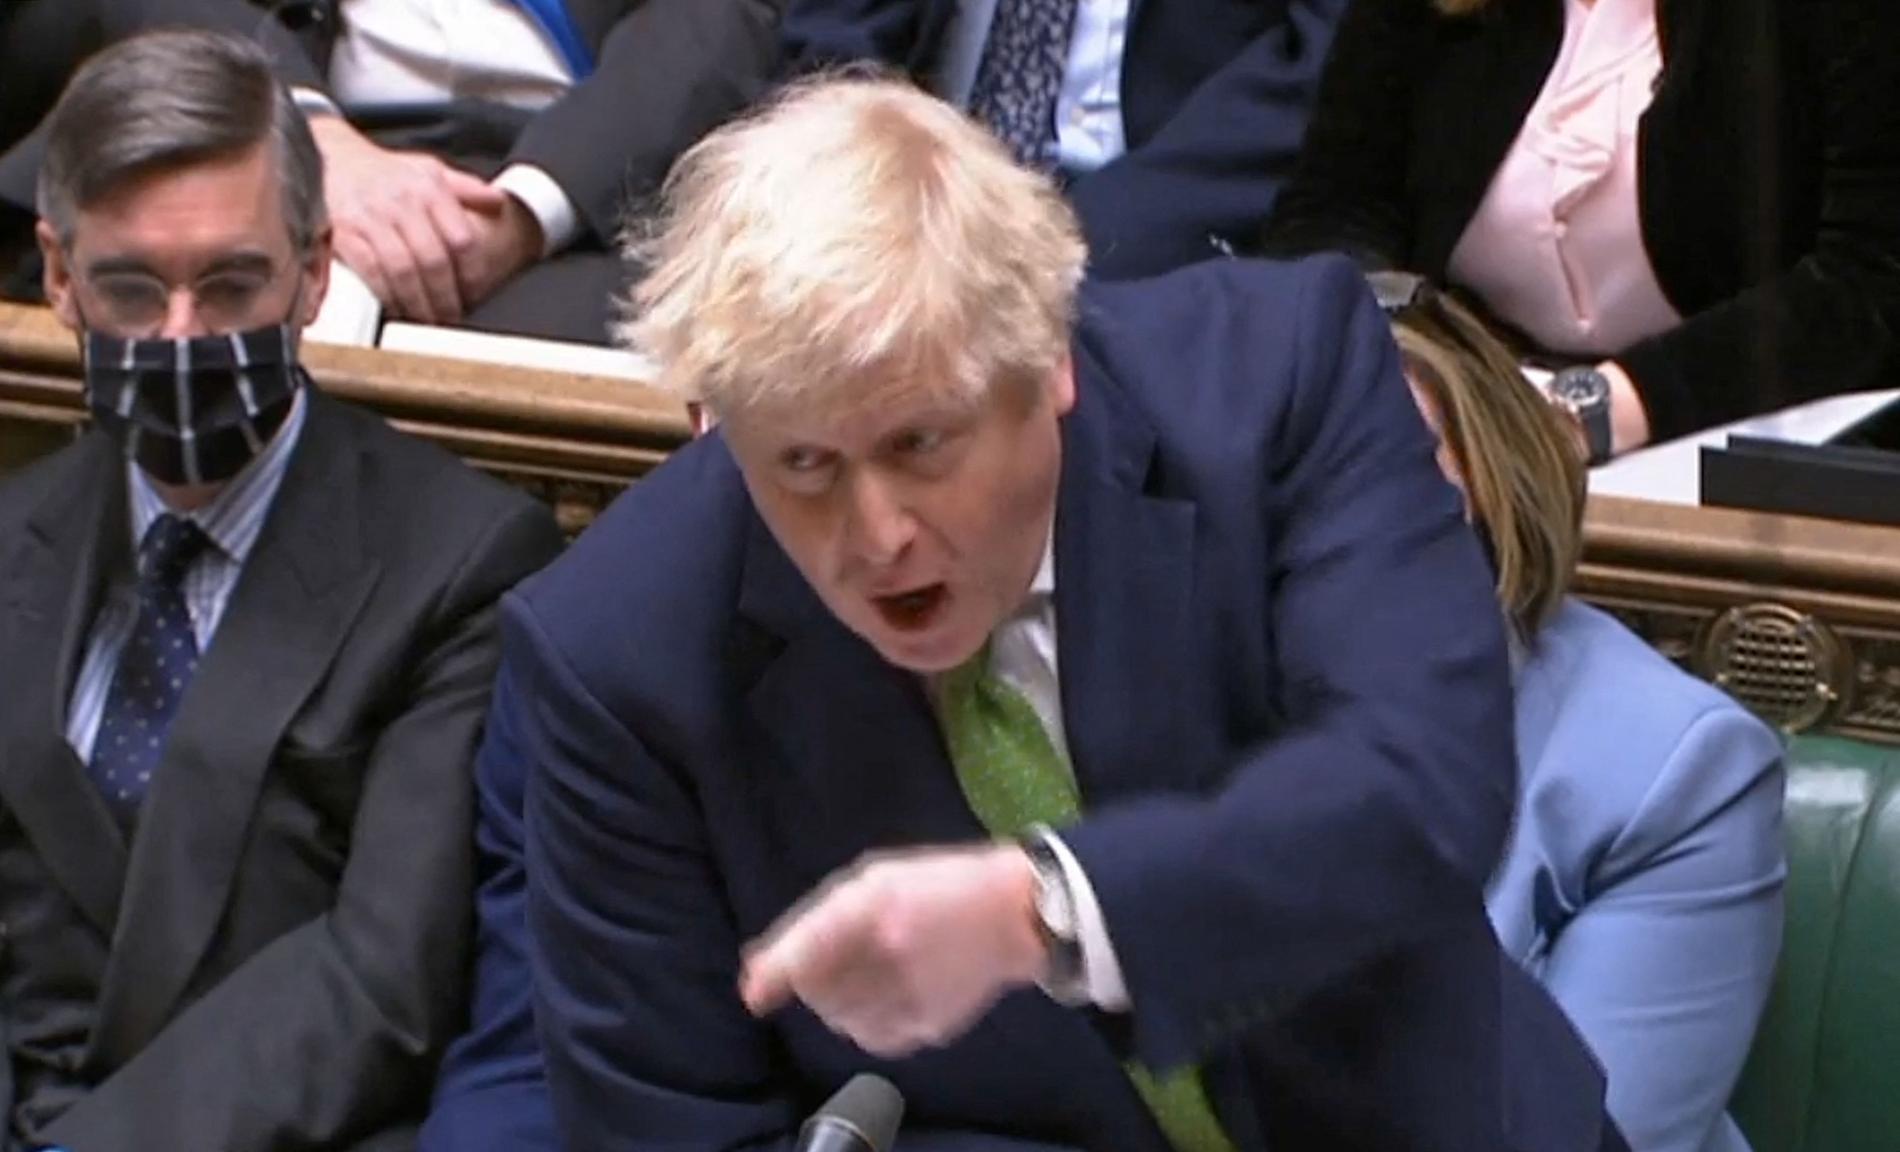 The pressure from himself increased against Boris Johnson: